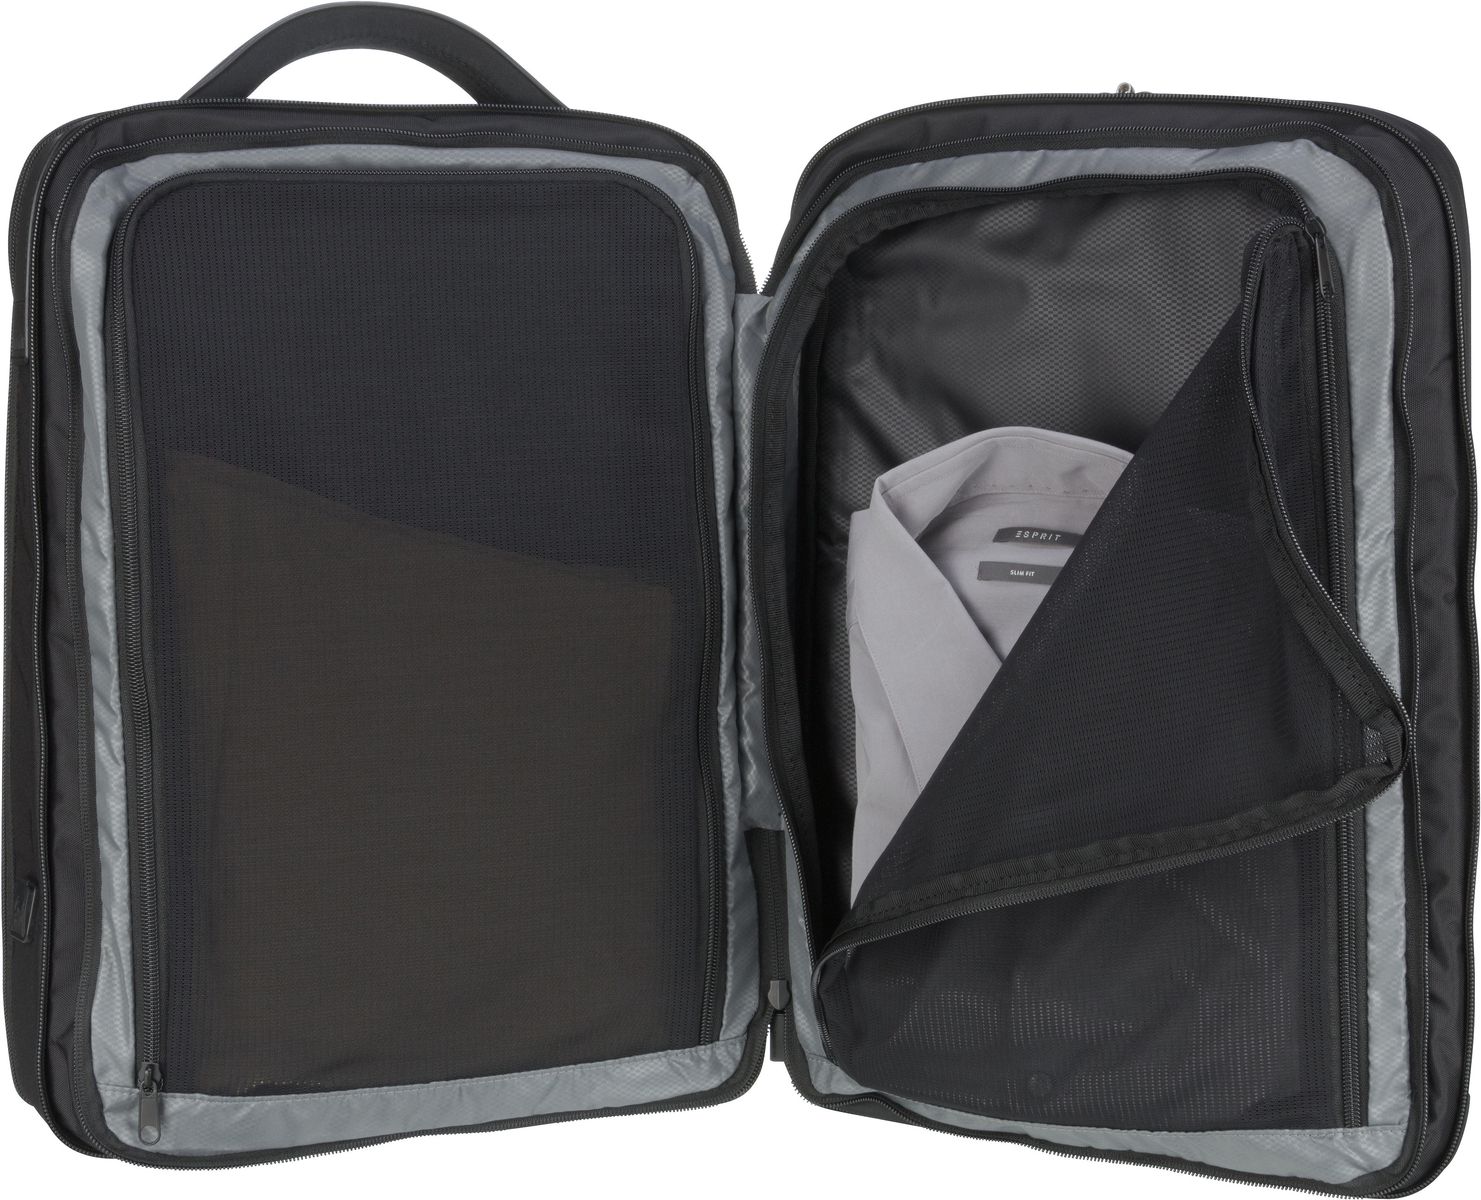 Samsonite Litepoint Laptop Backpack 17.3'' - Black